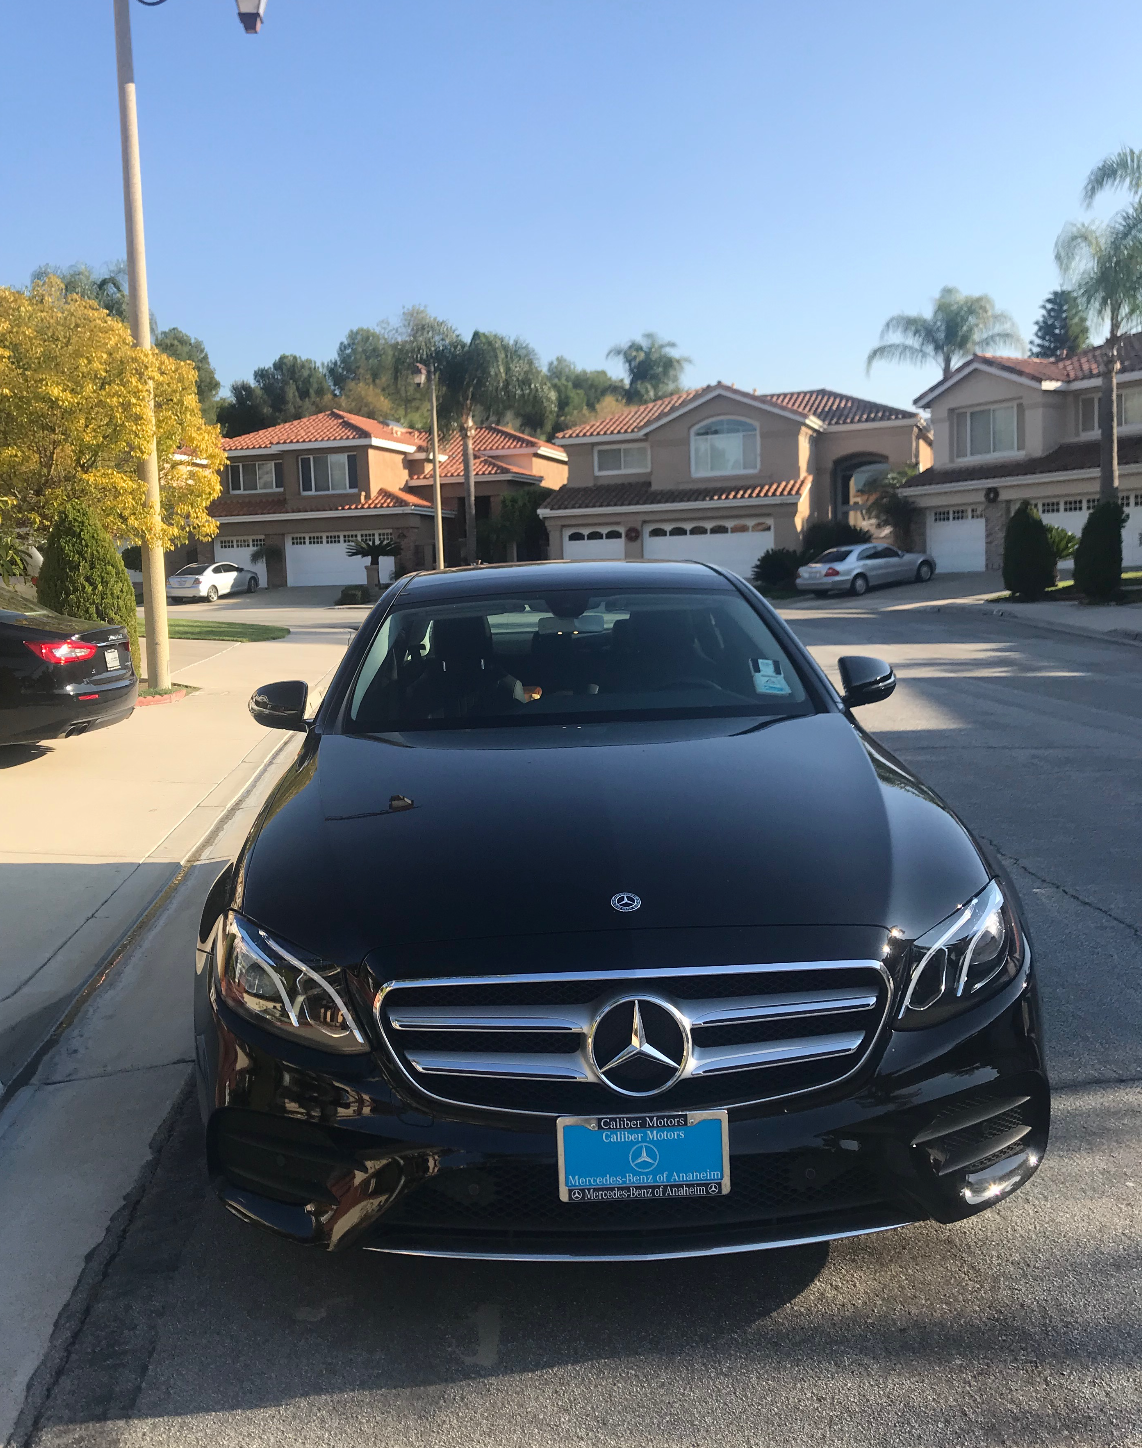 2018 Mercedes-Benz E400 - 2018 MB E400 4Matic Sedan Black/Black - Lease Transfer - $736 w/o tax - Incentive - Used - VIN WDDZF6GB4JA453751 - 4,100 Miles - 6 cyl - 4WD - Automatic - Sedan - Black - Anaheim Hills, CA 92807, United States